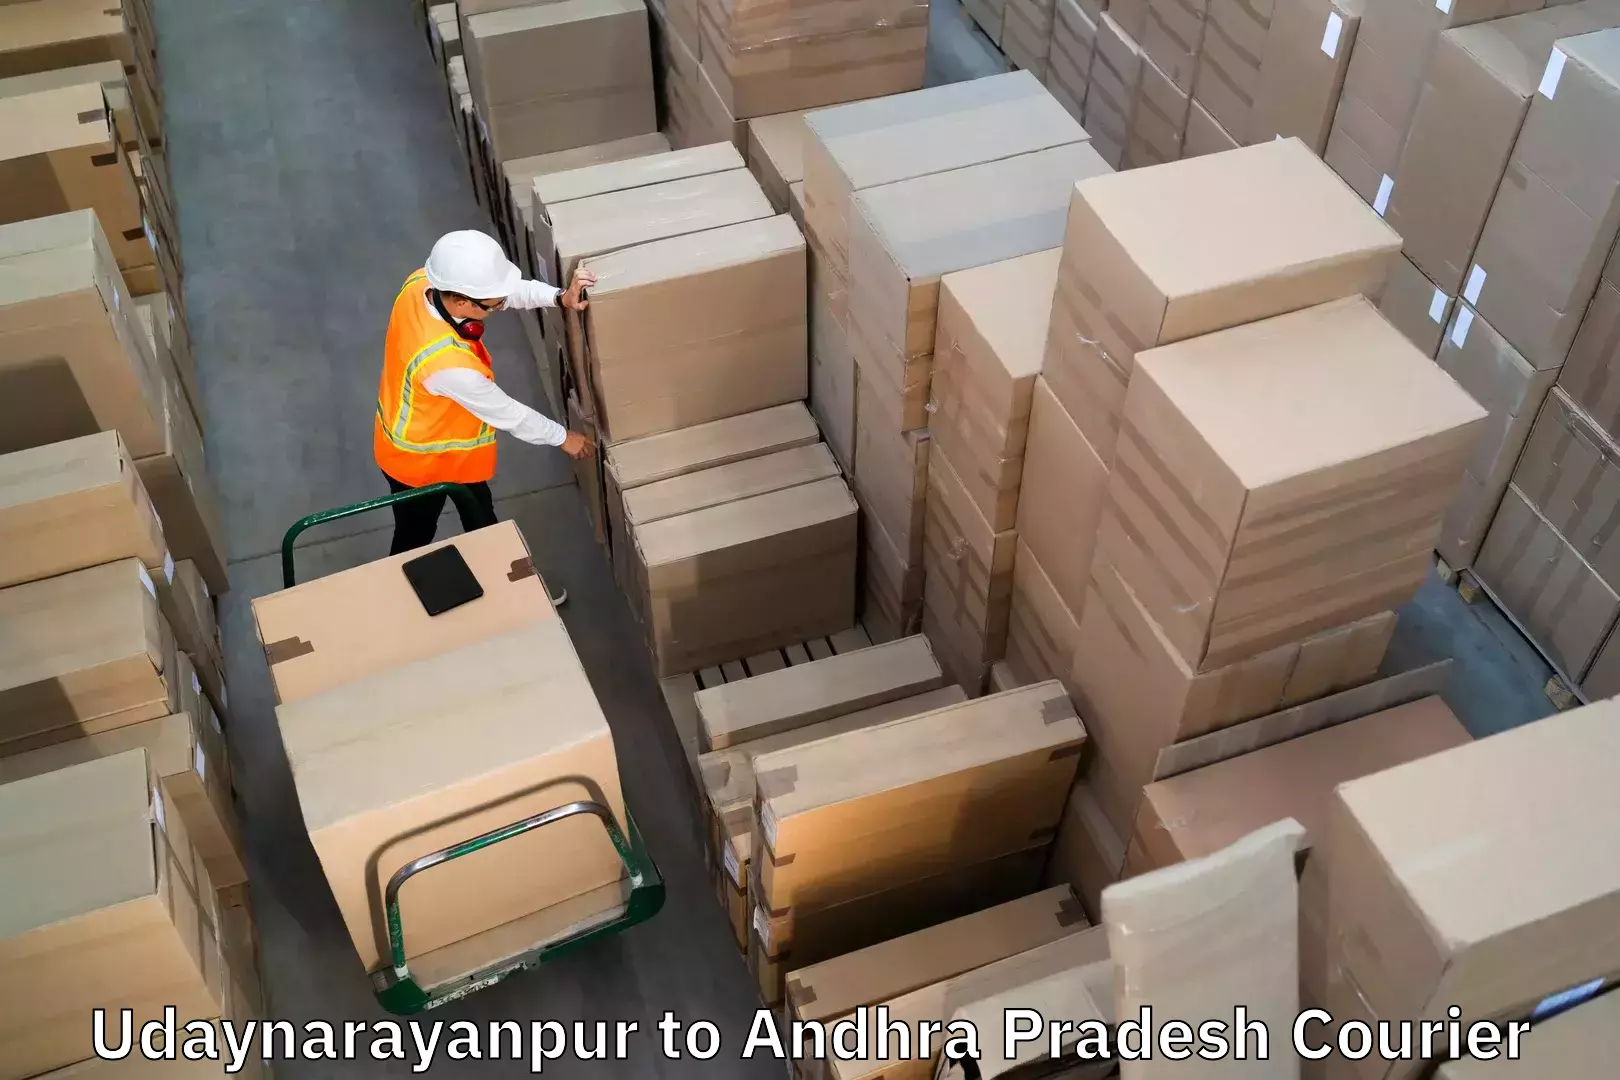 Baggage transport professionals in Udaynarayanpur to Tirupati